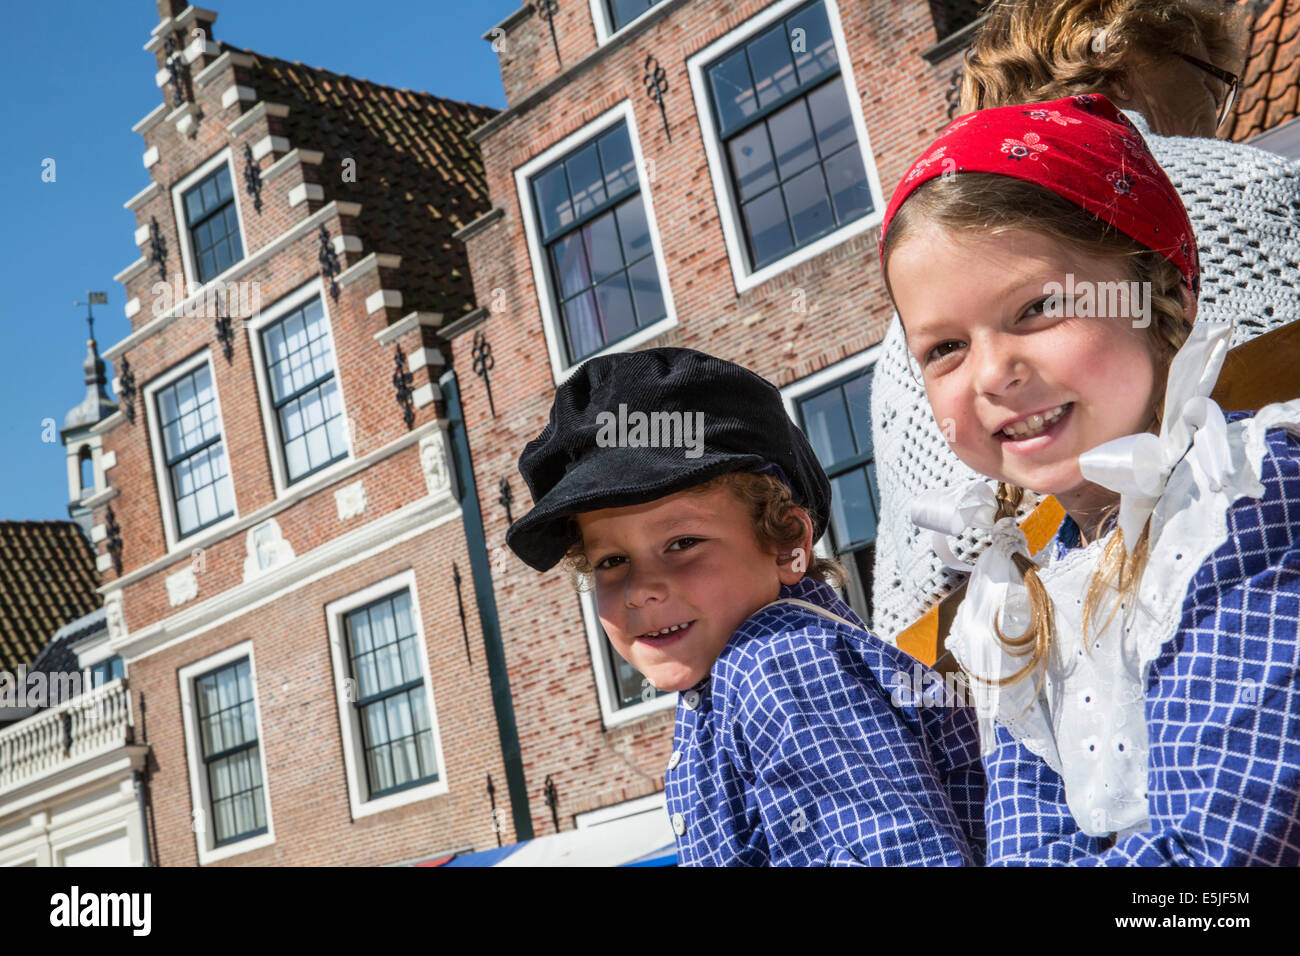 Netherlands, Edam, Cheese market, children in traditional dress Stock Photo